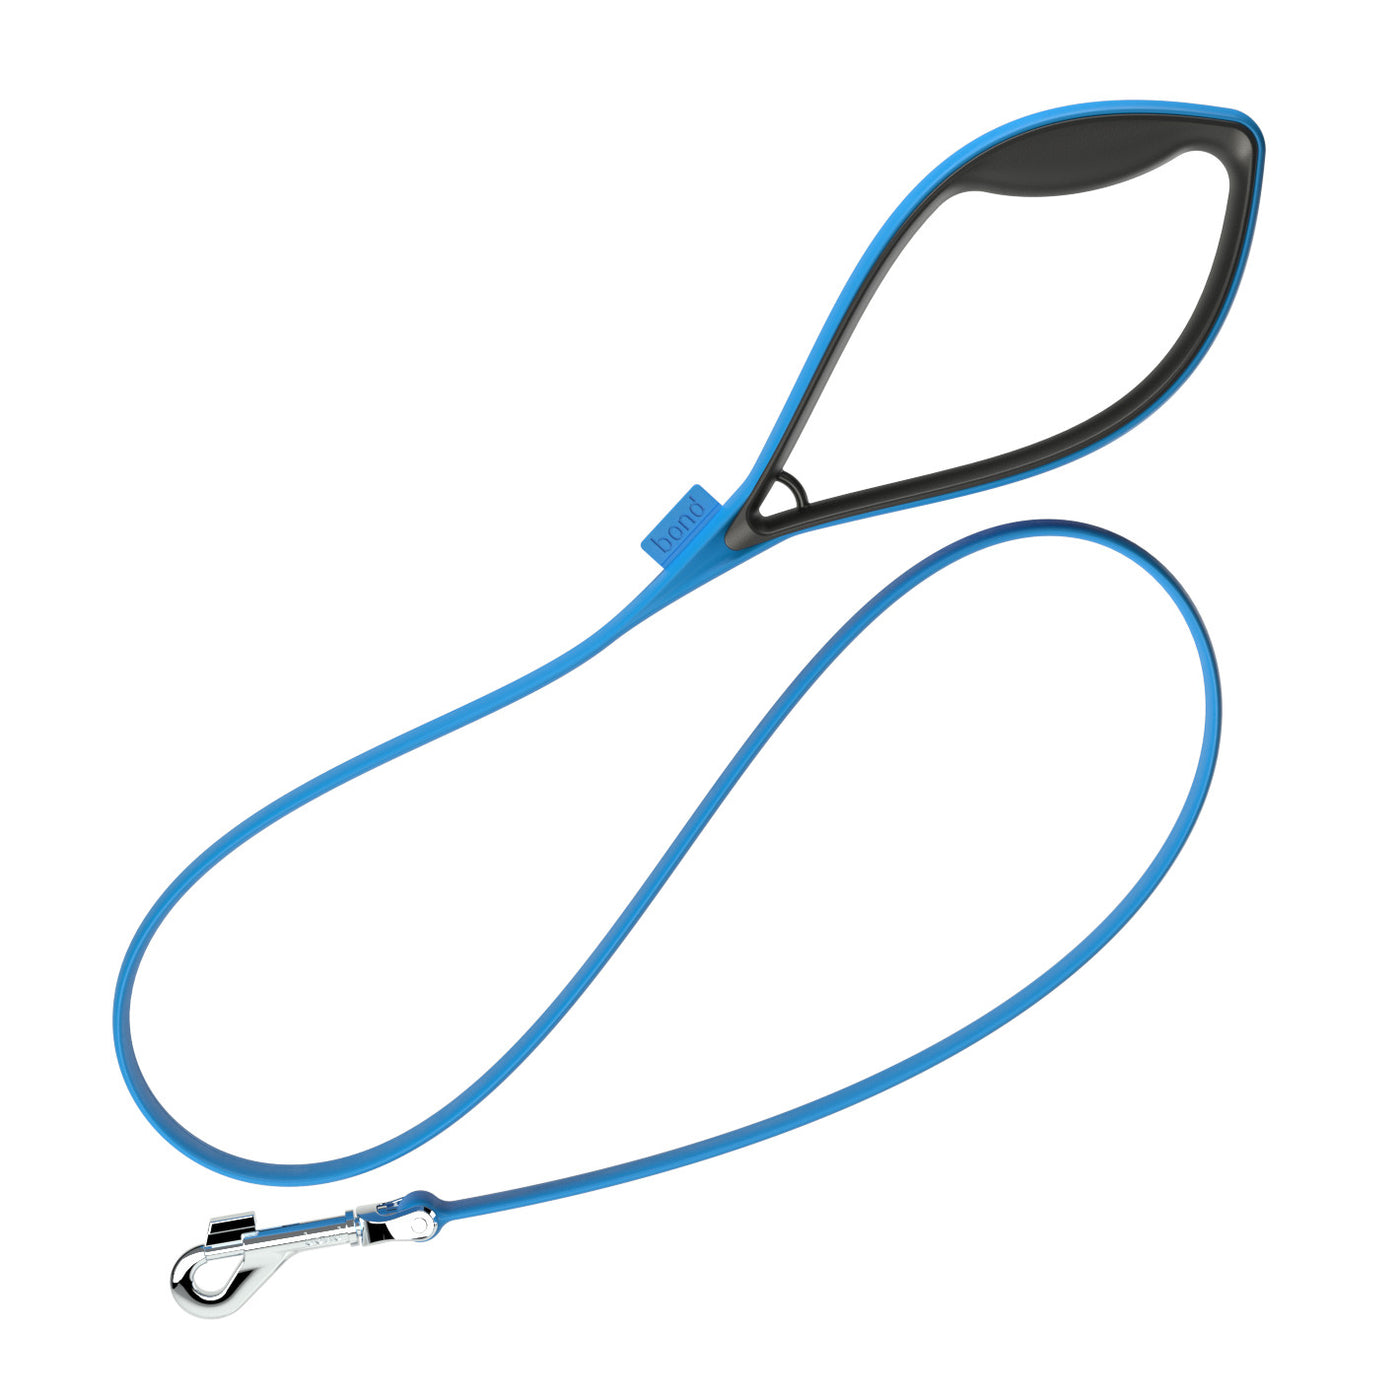 Bleu dog leash with black handle